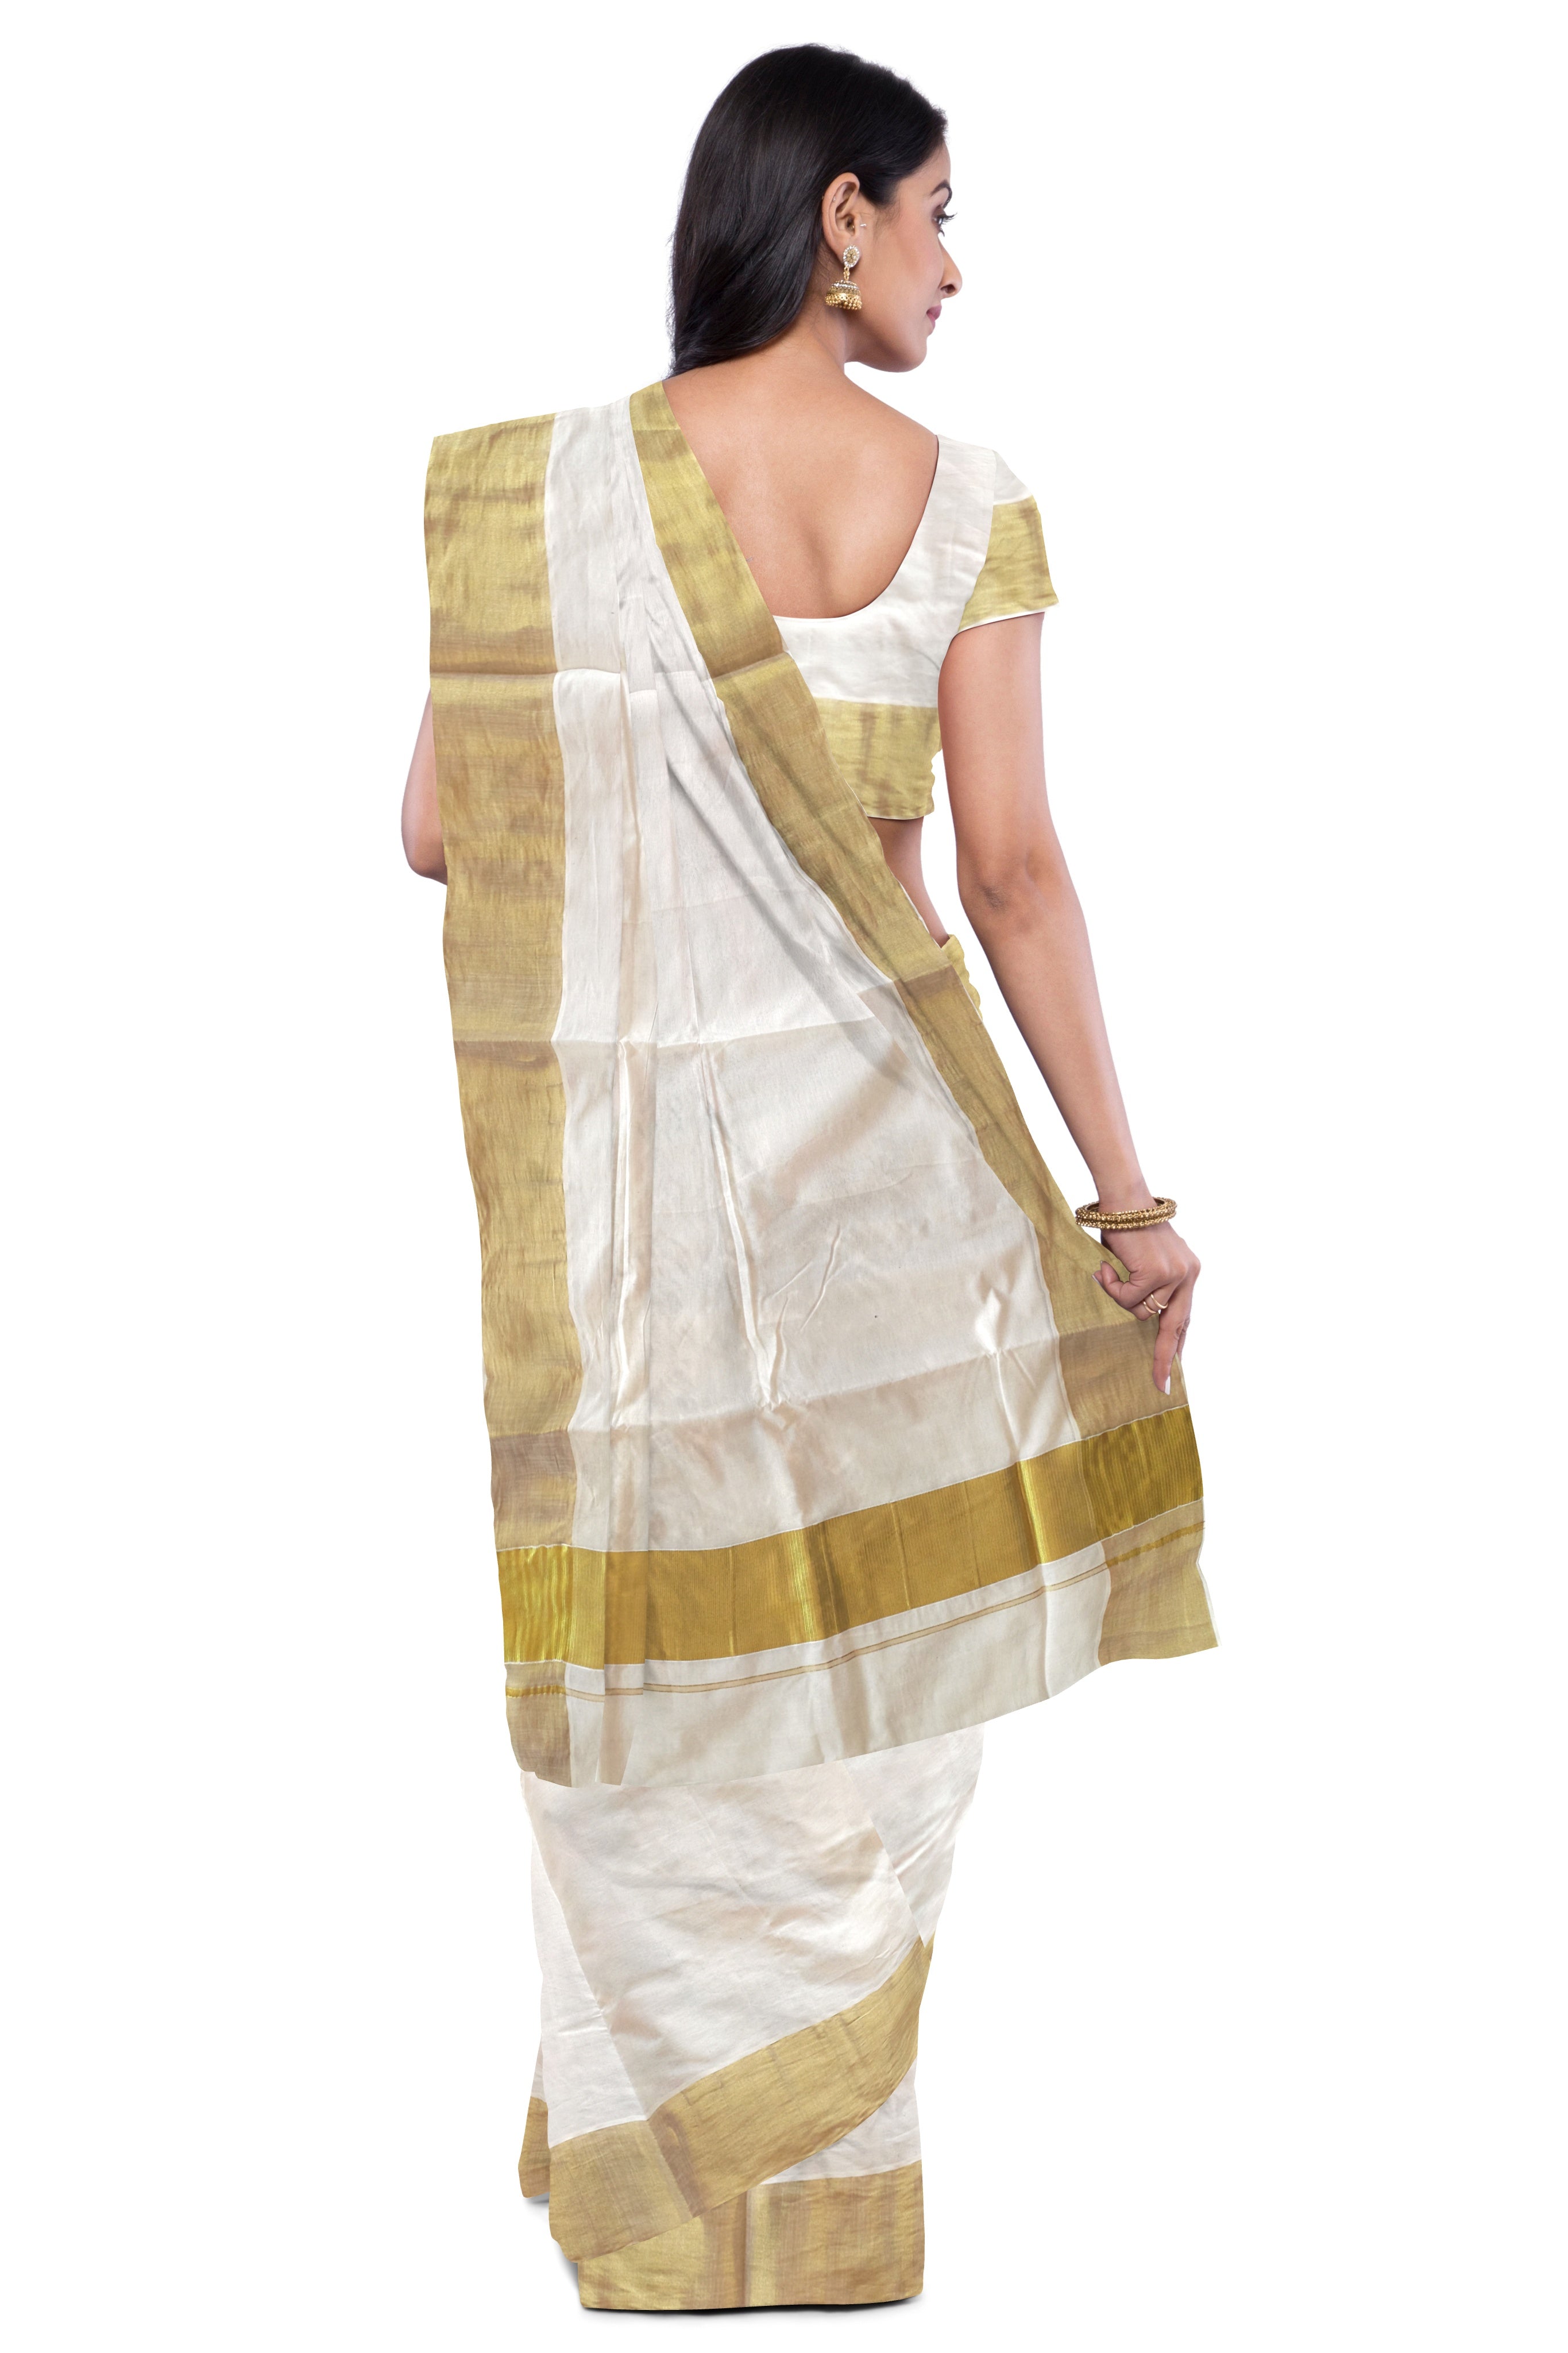 Cream plain design kerala saree, contrast green border